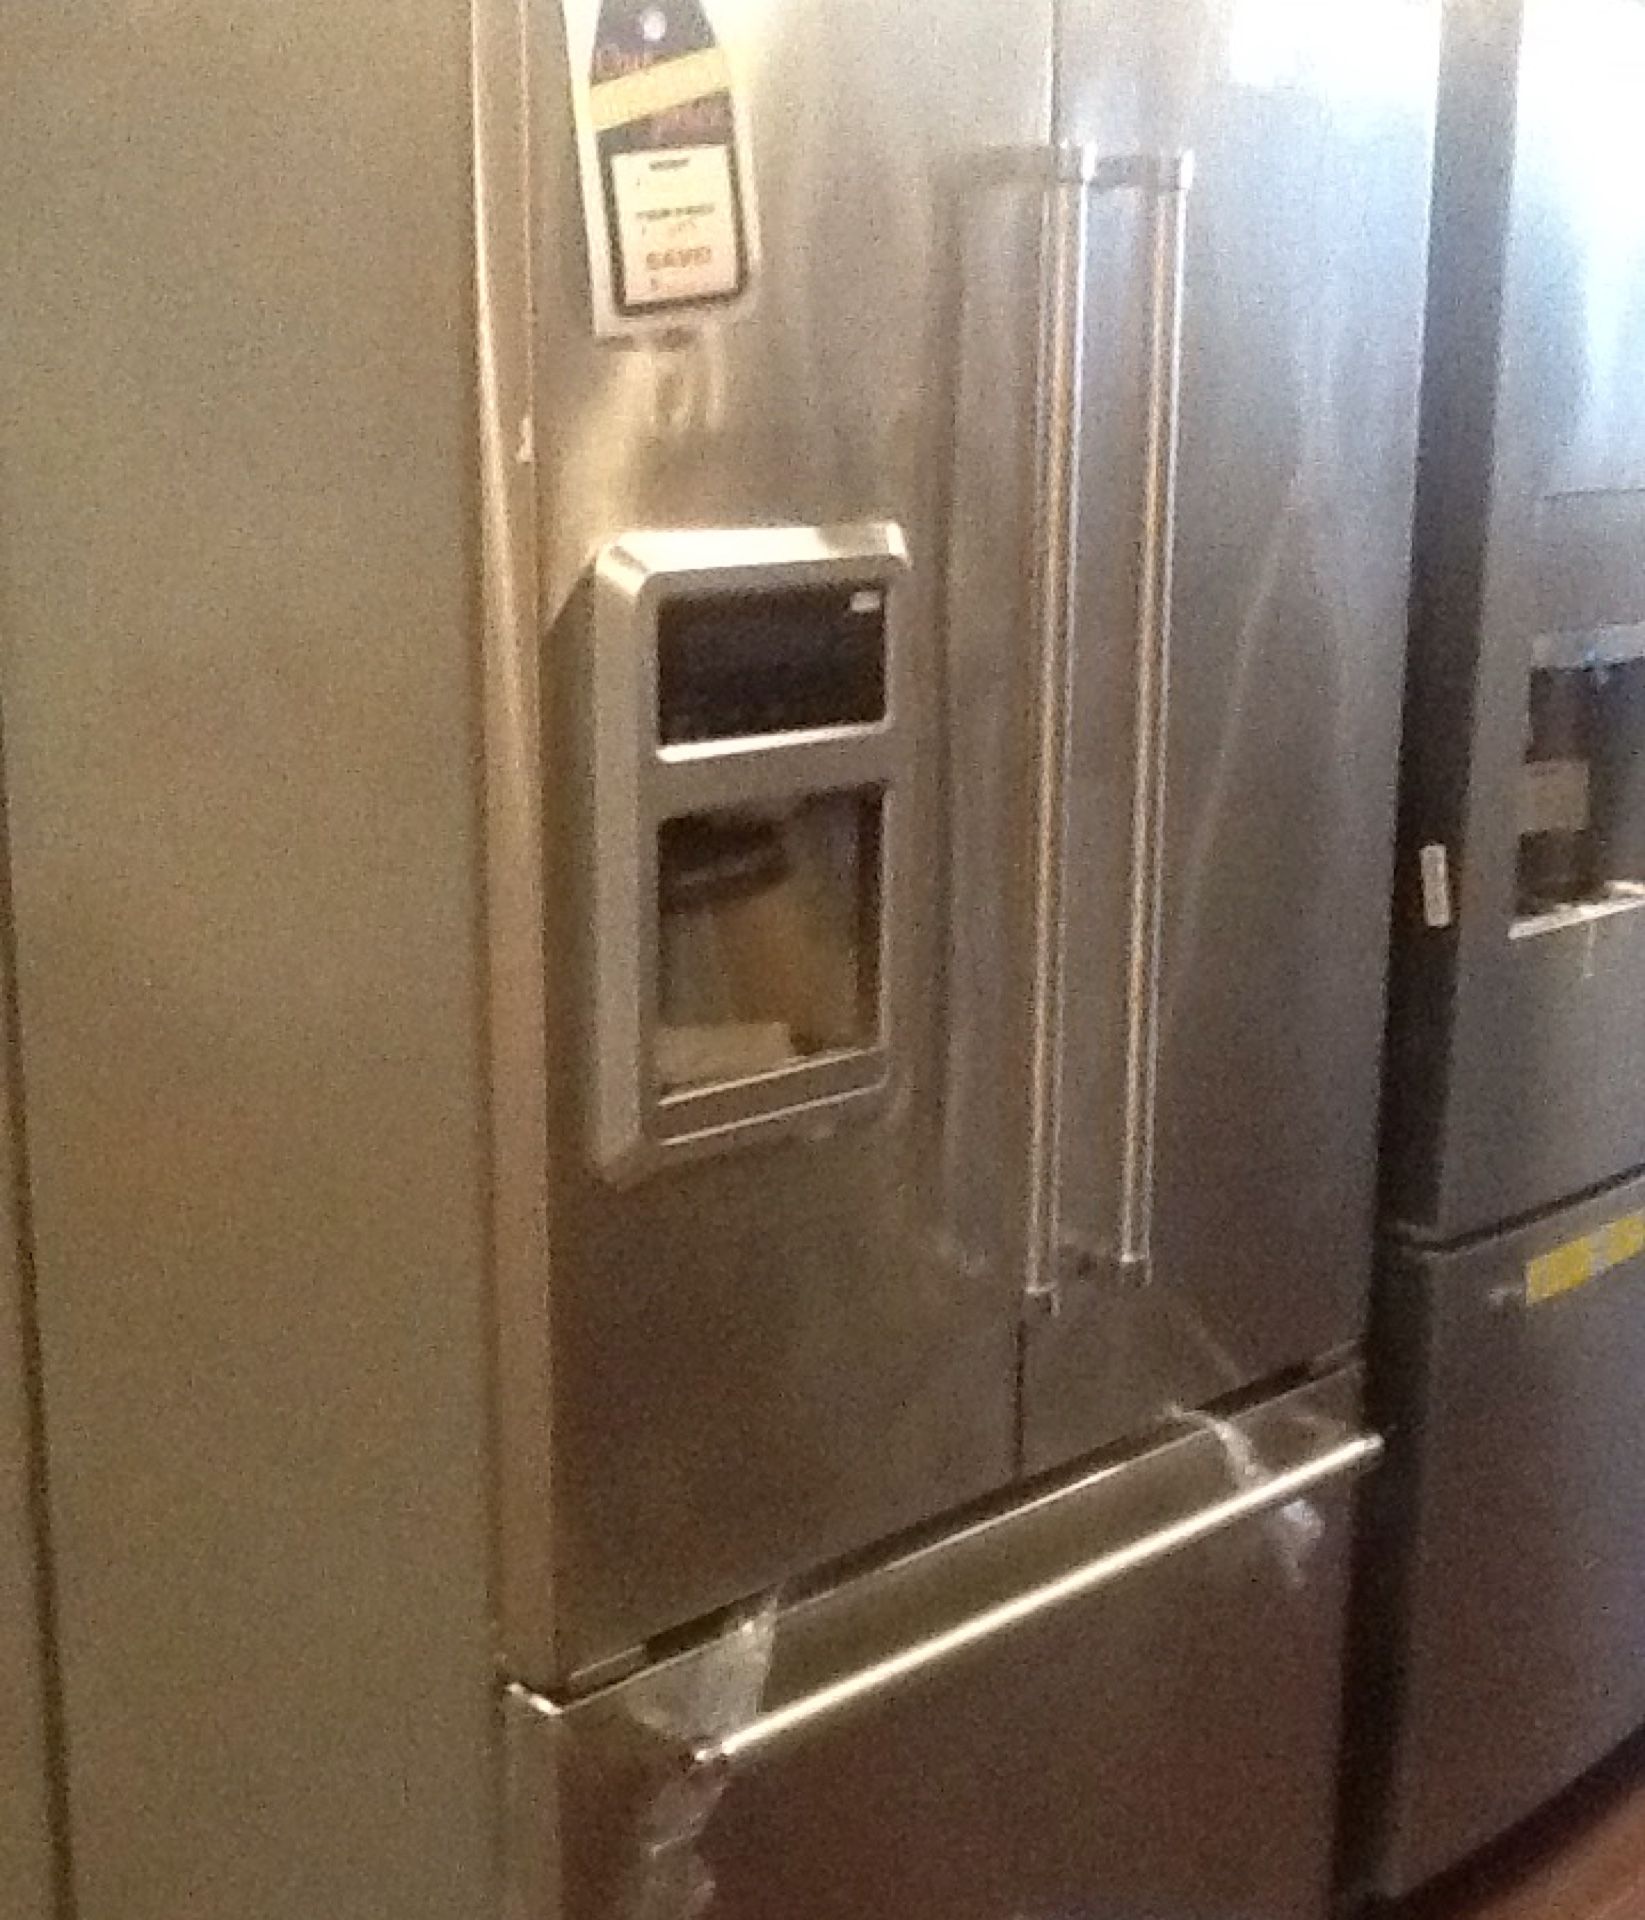 New open box kitchen aid refrigerator KRFC400ESS